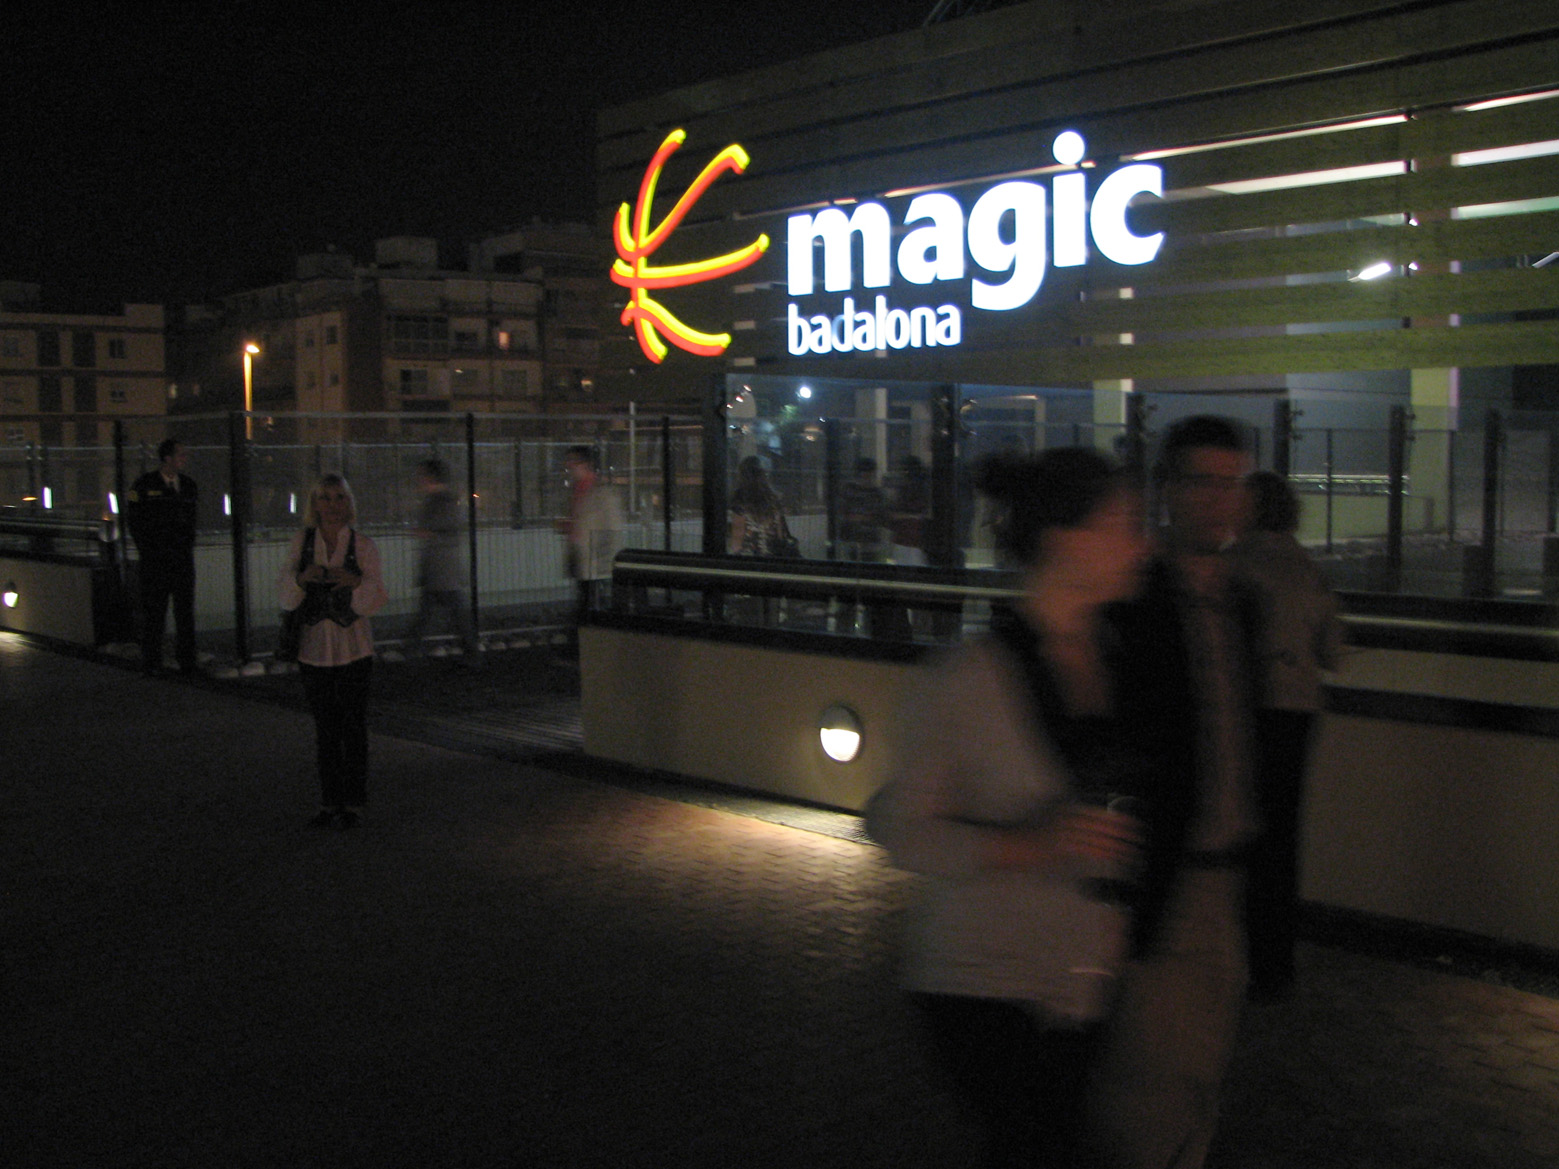 Màgic Badalona shopping mall in 2008